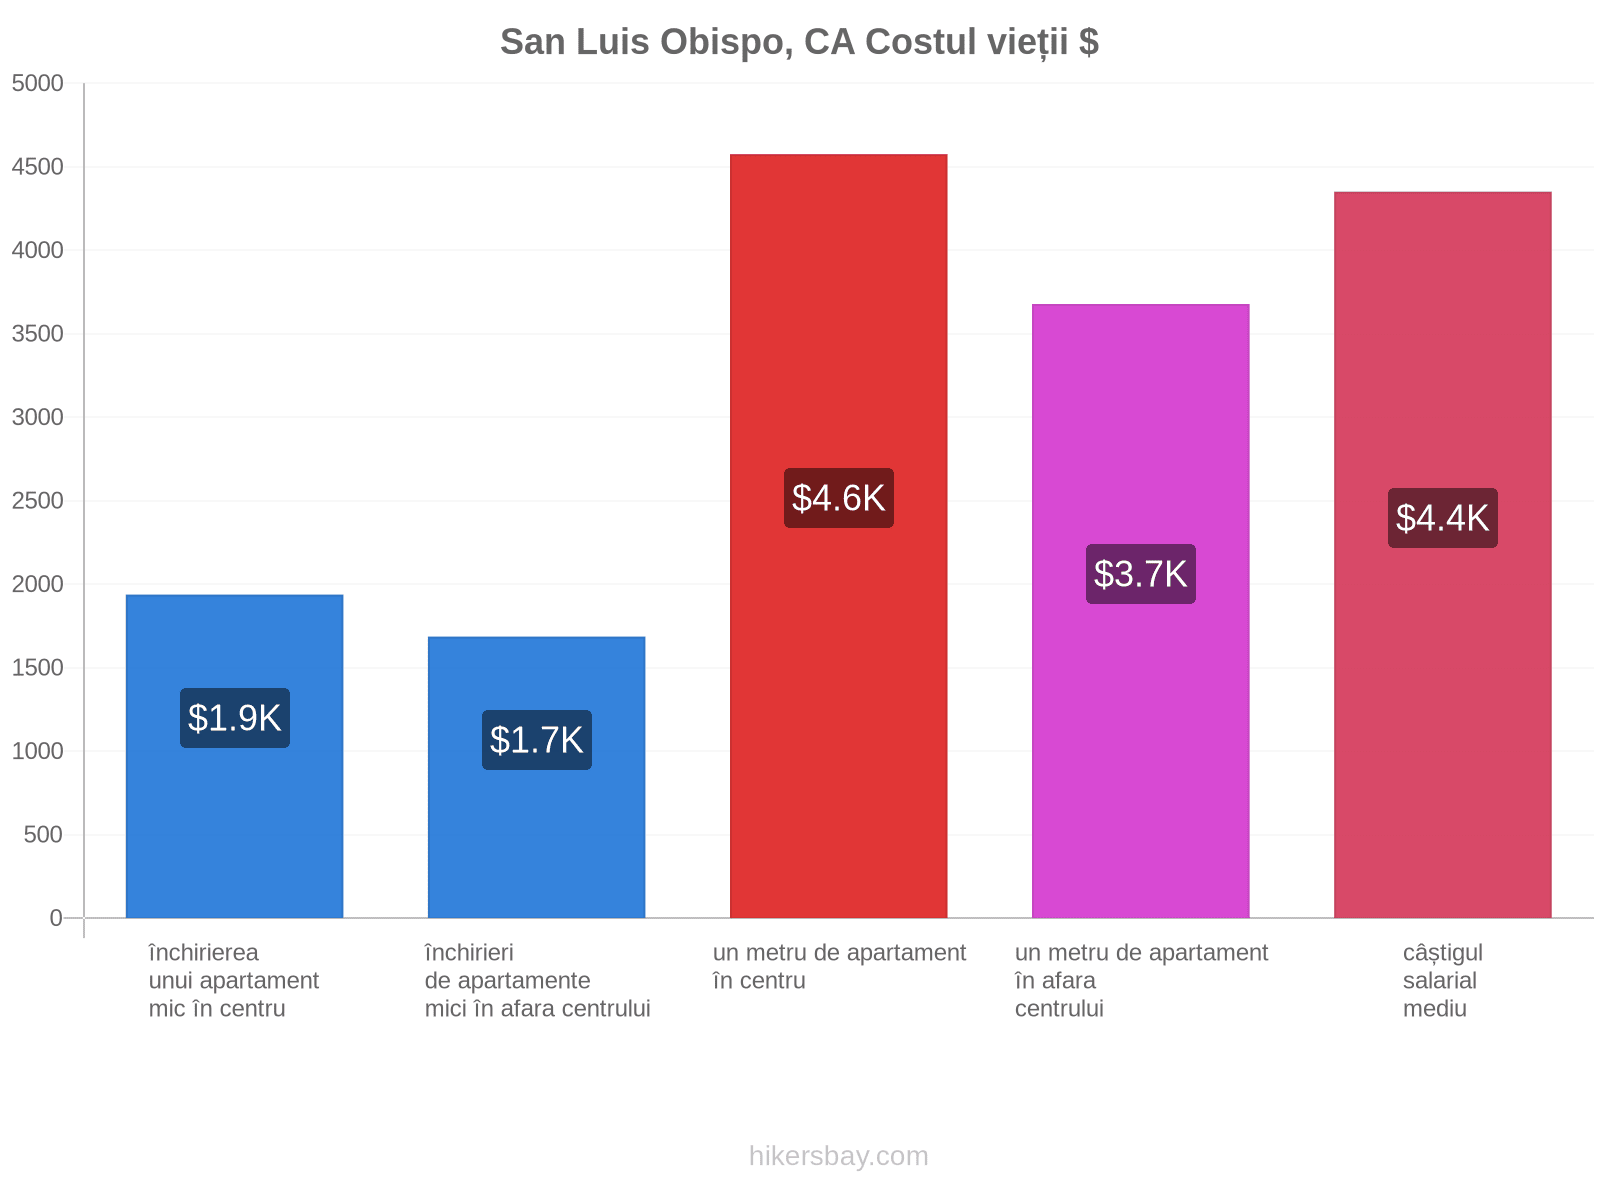 San Luis Obispo, CA costul vieții hikersbay.com